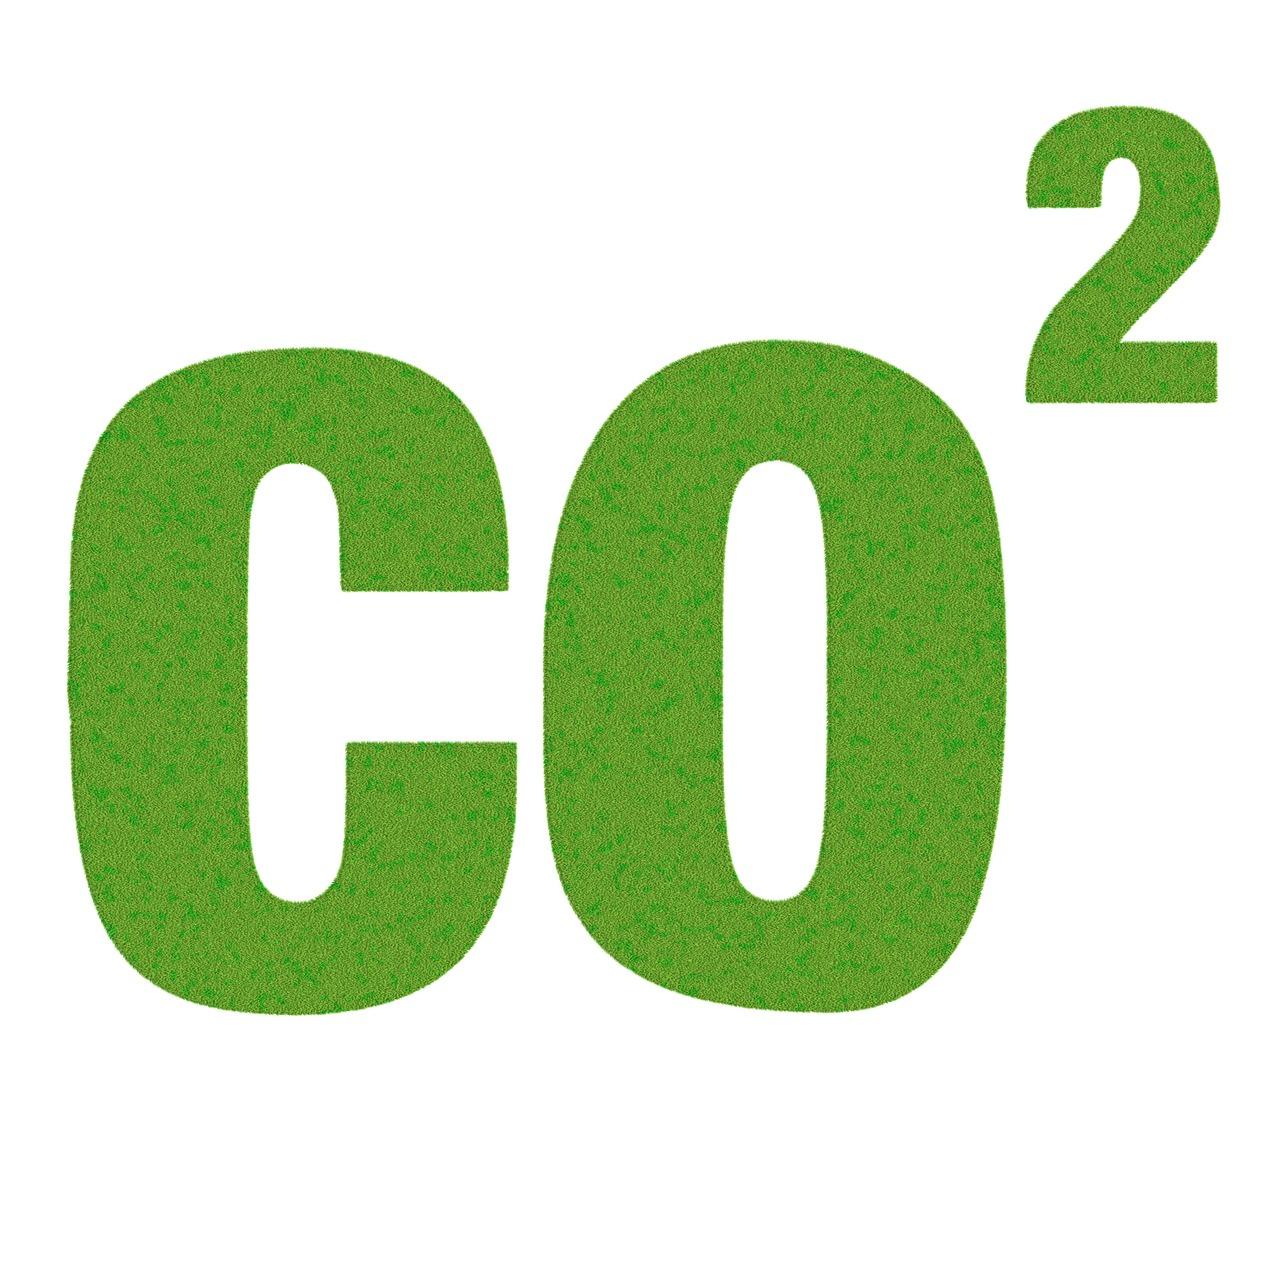 CO2-Steuer bei Pkw